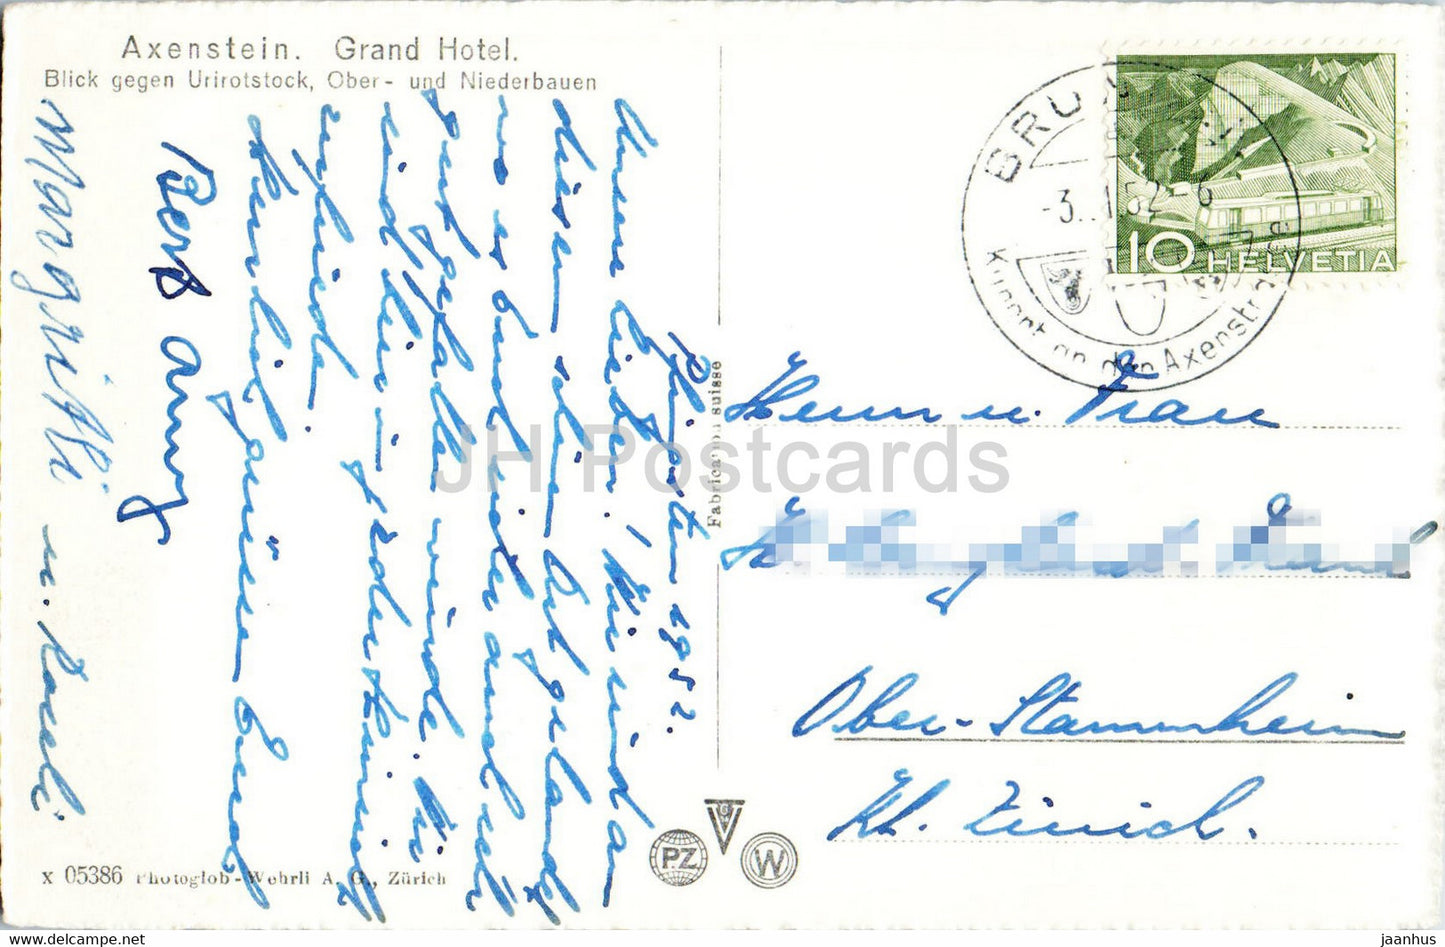 Axenstein - Grand Hotel - Blick gegen Urirotstock - Ober und Niederbauen - 1952 - carte postale ancienne - Suisse - utilisé